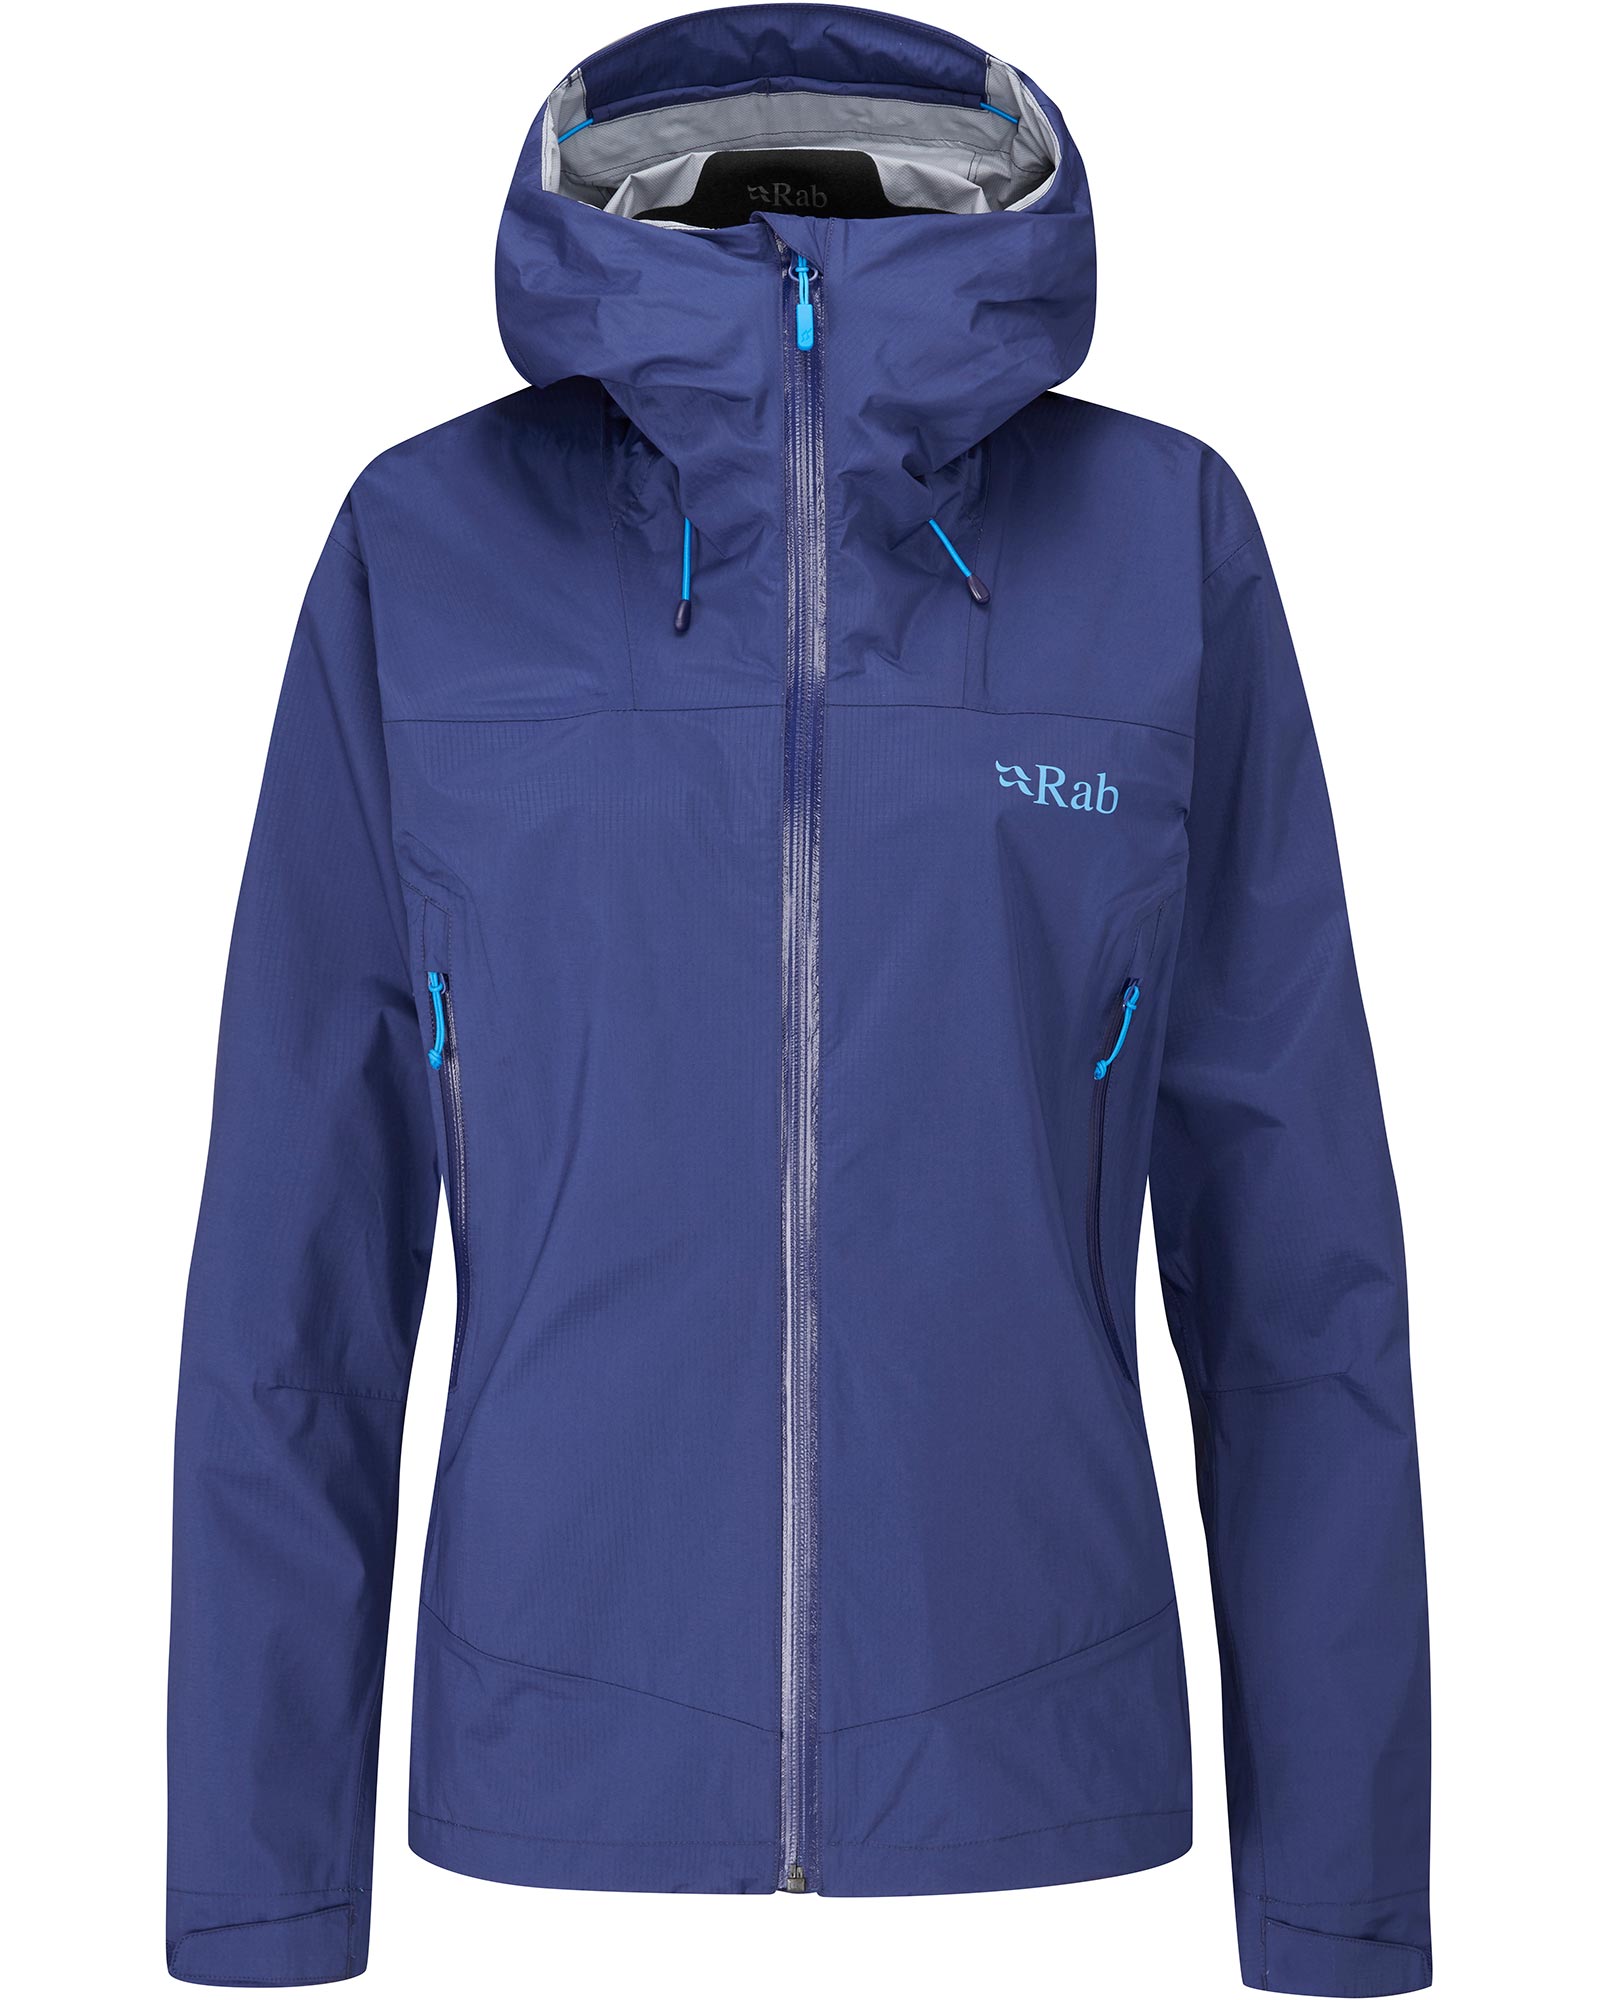 Rab Downpour Plus 2.0 Women’s Jacket - Nightfall Blue 10